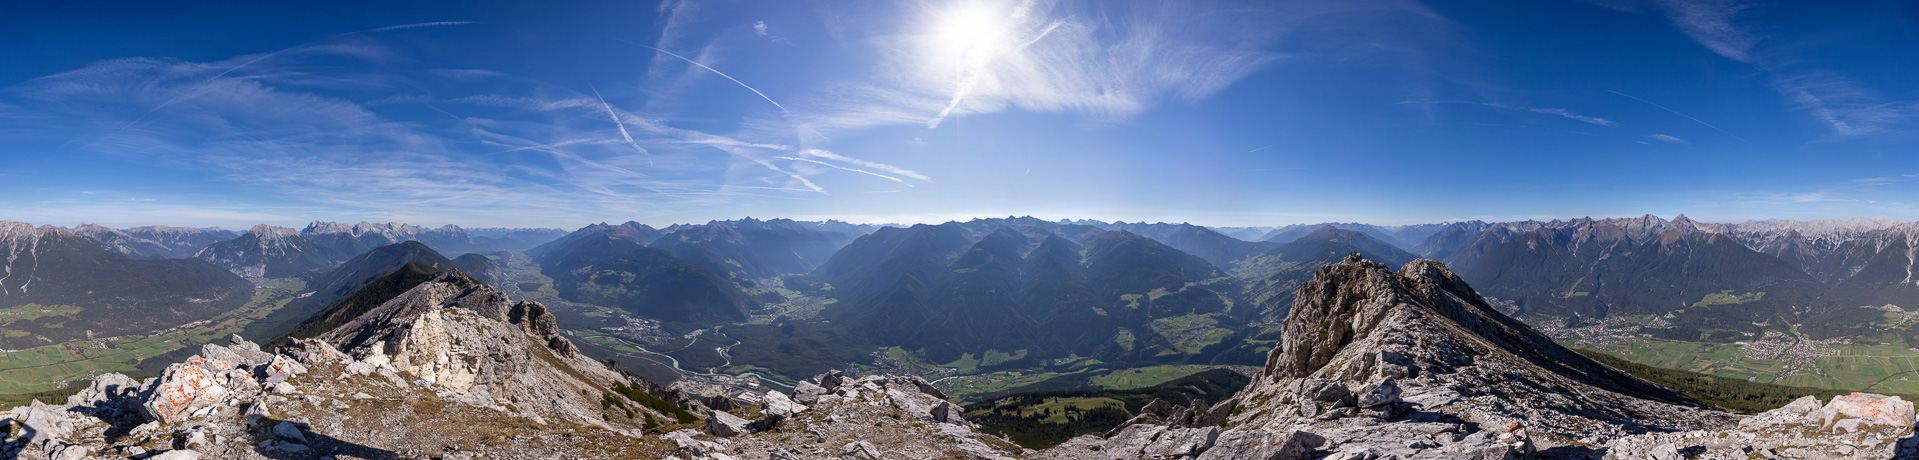 Wundervolles Gipfelpanorama hoch über Imst.